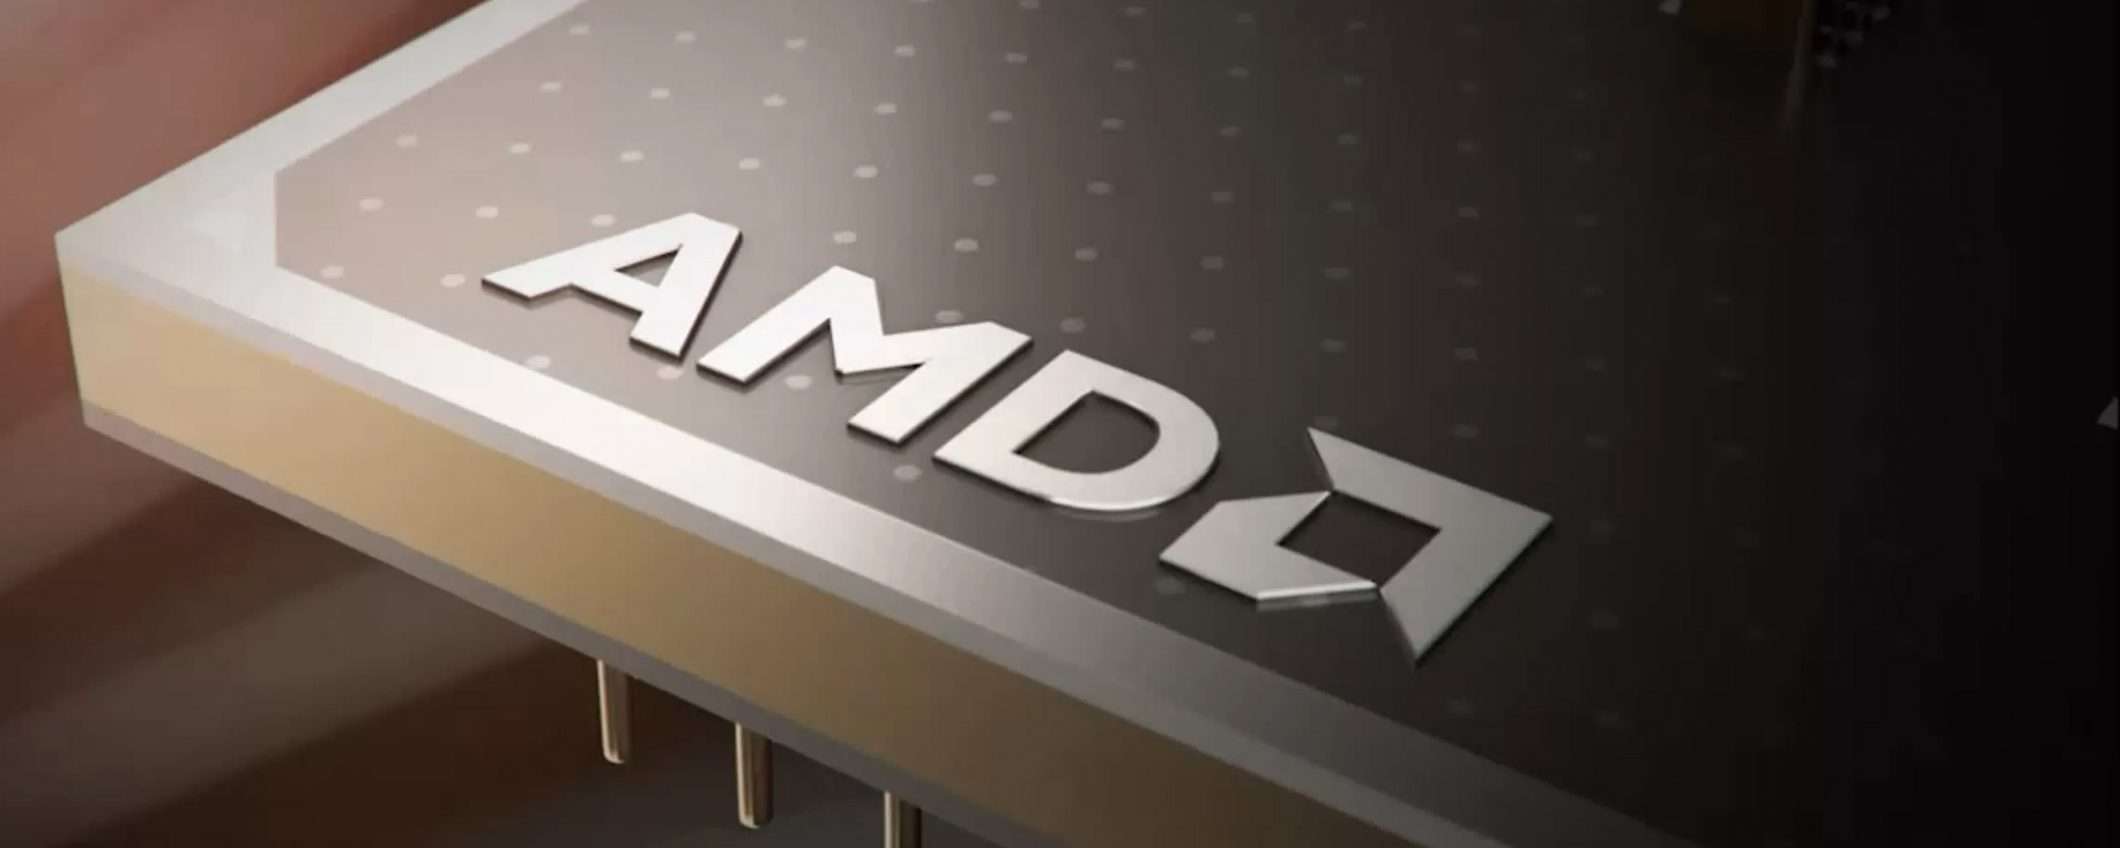 Zen 3: AMD Ryzen 5000, ufficiali le nuove CPU